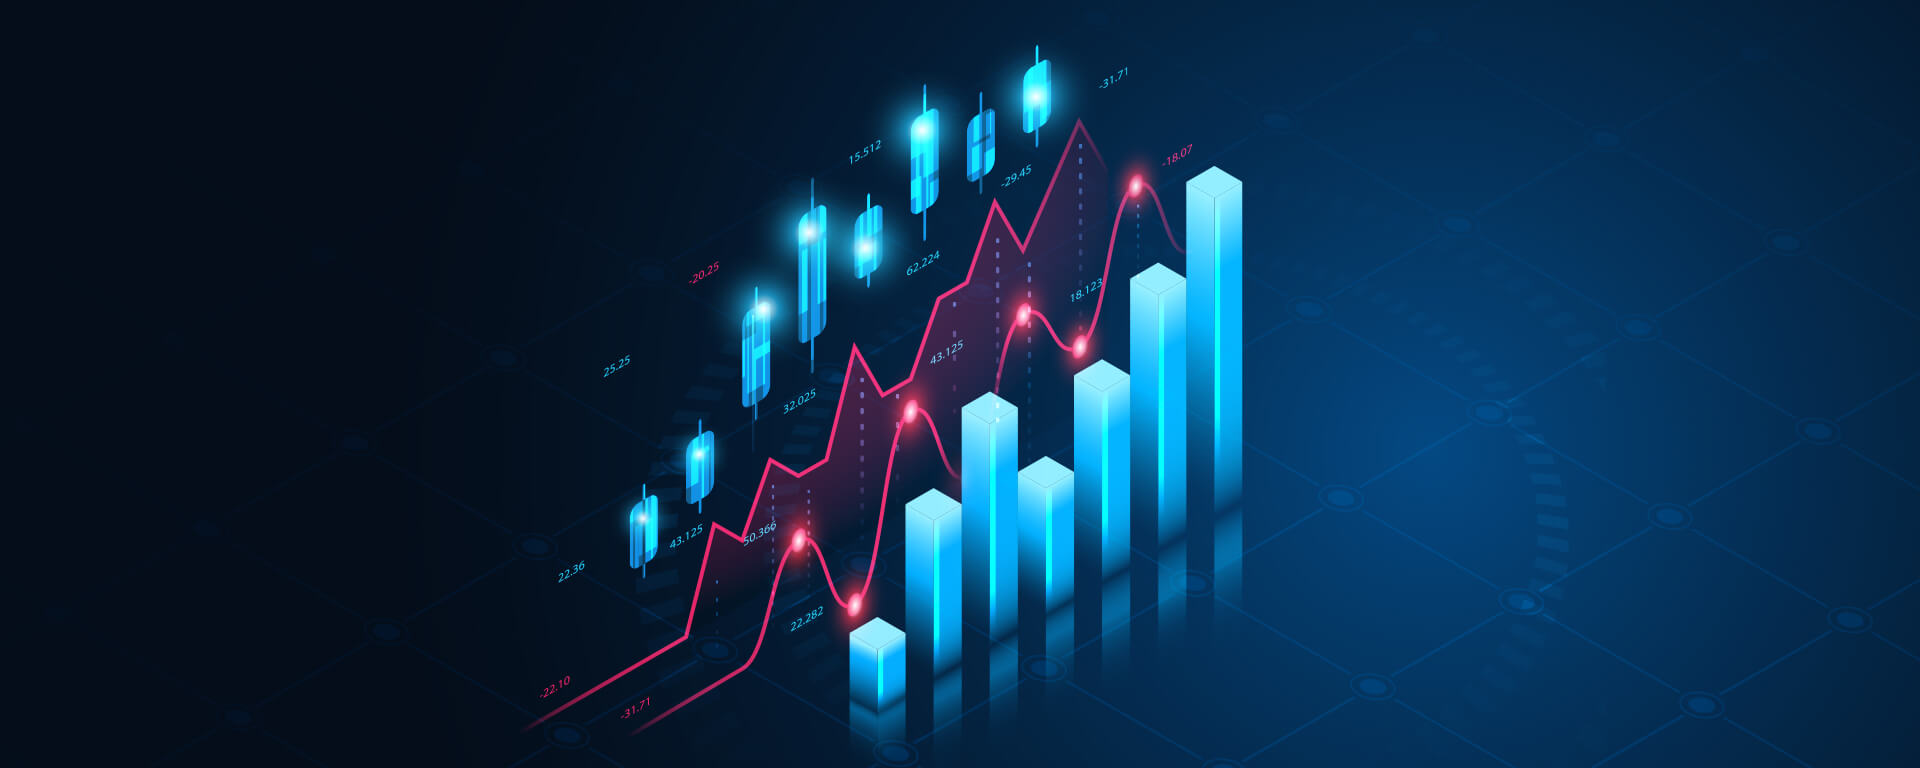 Forex Trading Basics: Types of Charts